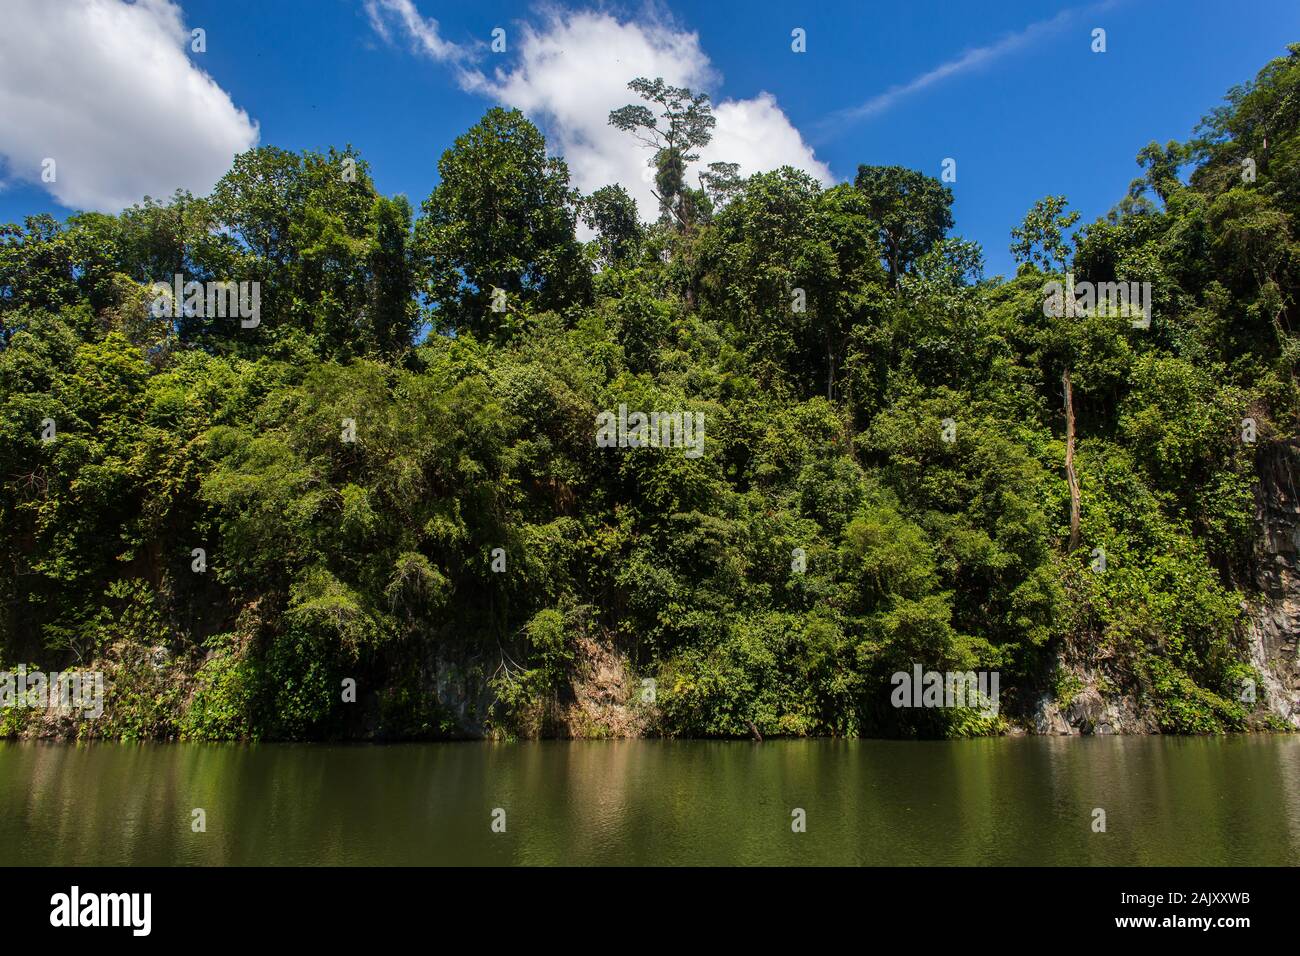 Quarry landscape to relax or distress through nature, Bukit Batok Nature Park, Singapore Stock Photo